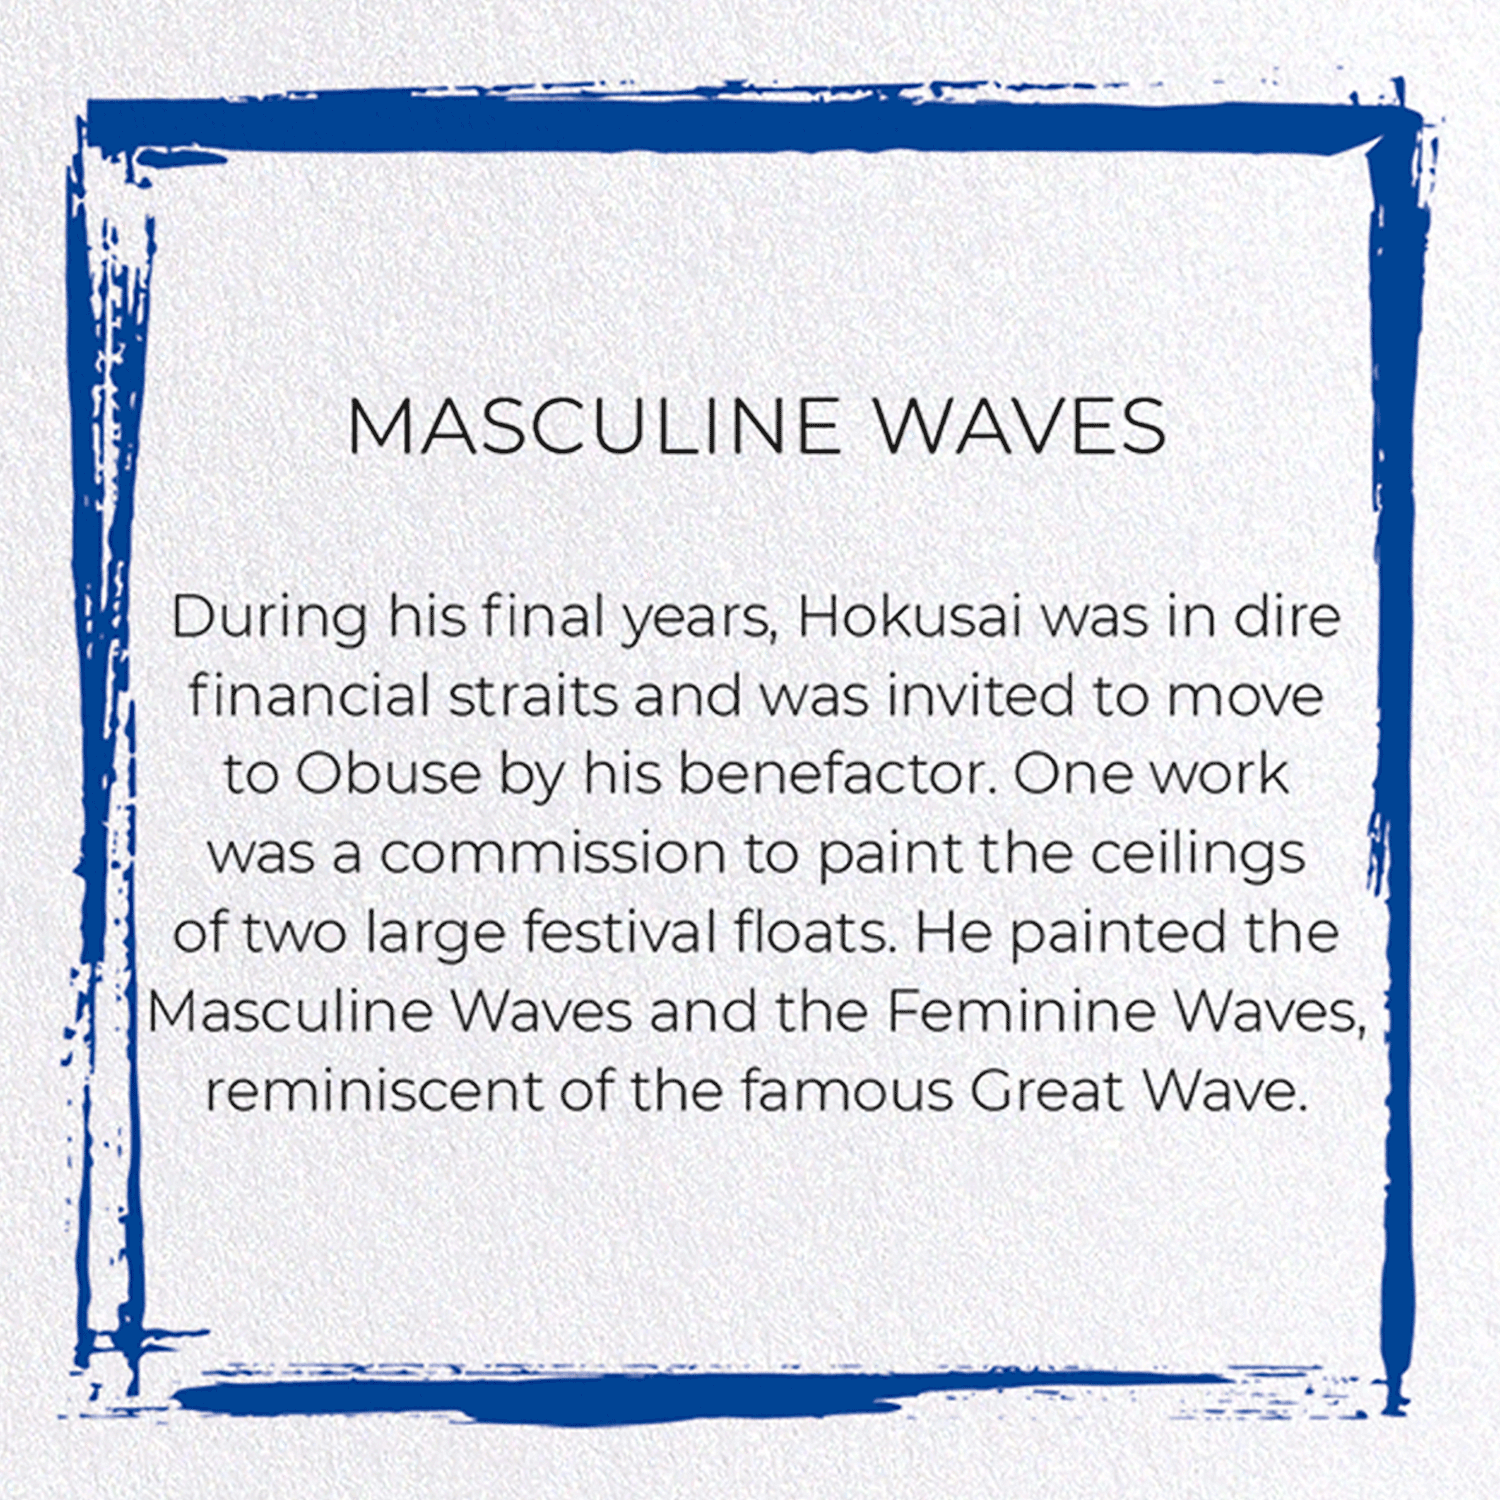 MASCULINE WAVES